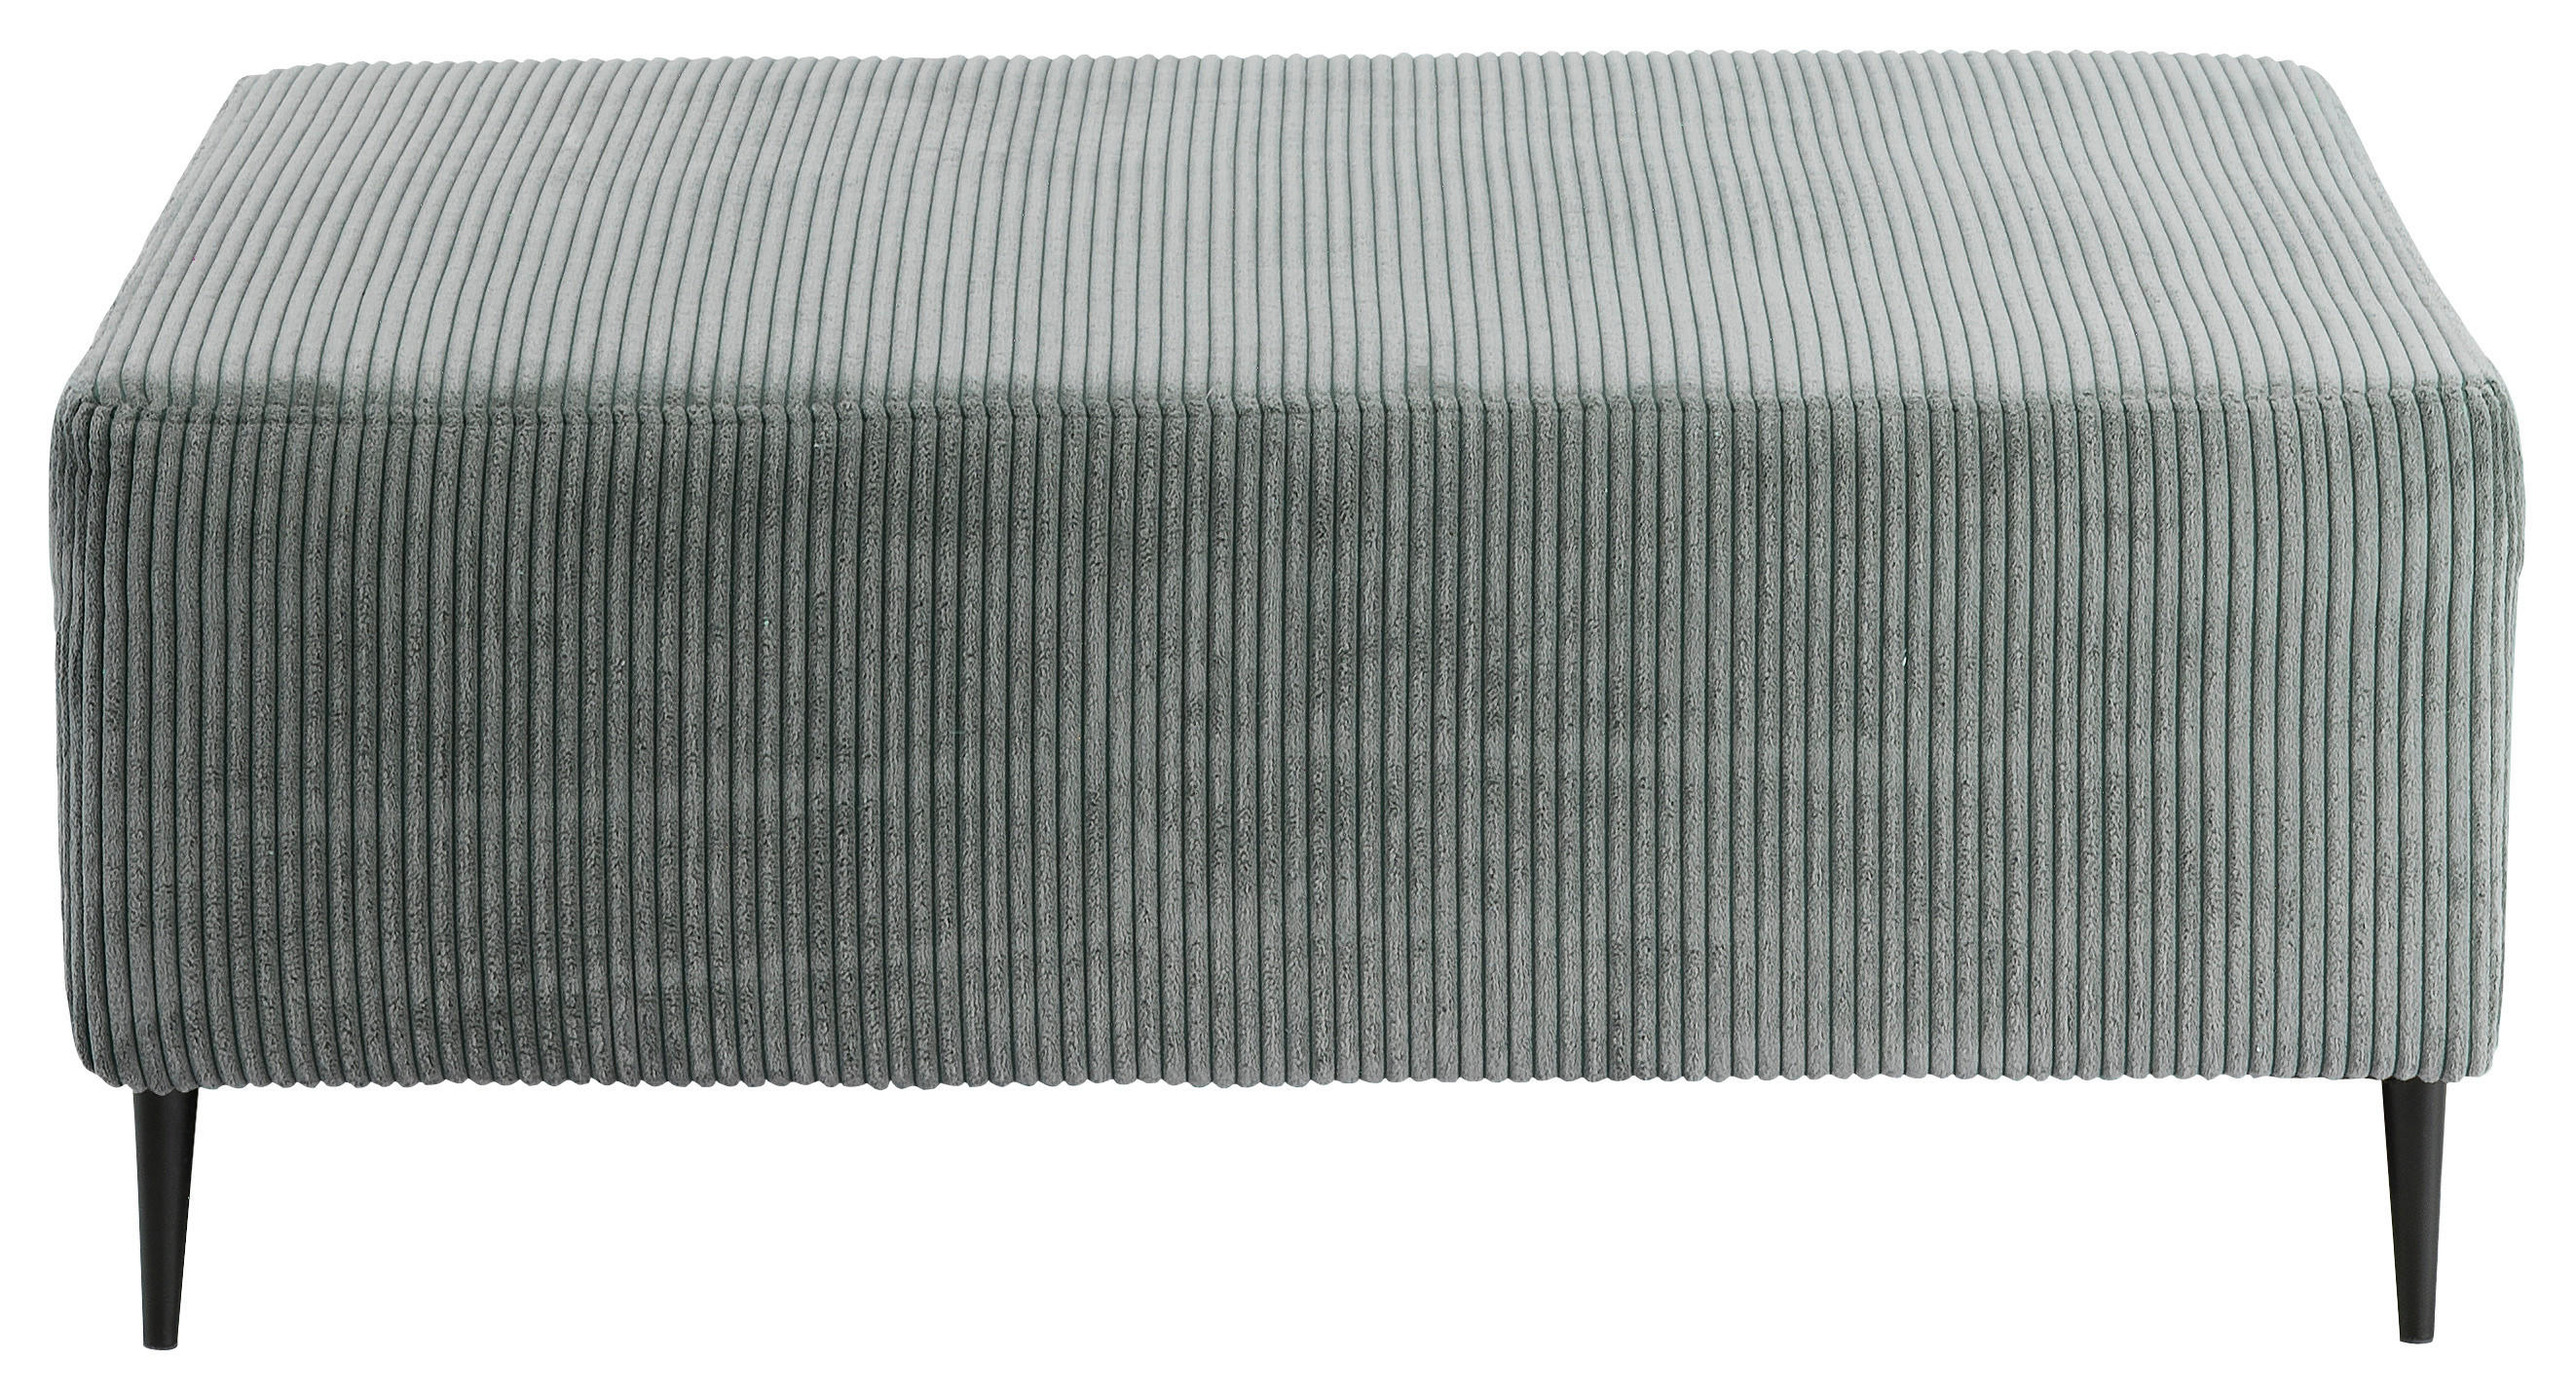 HOCKER in Textil Hellblau  - Schwarz/Hellblau, Design, Textil/Metall (109/45/109cm) - Livetastic